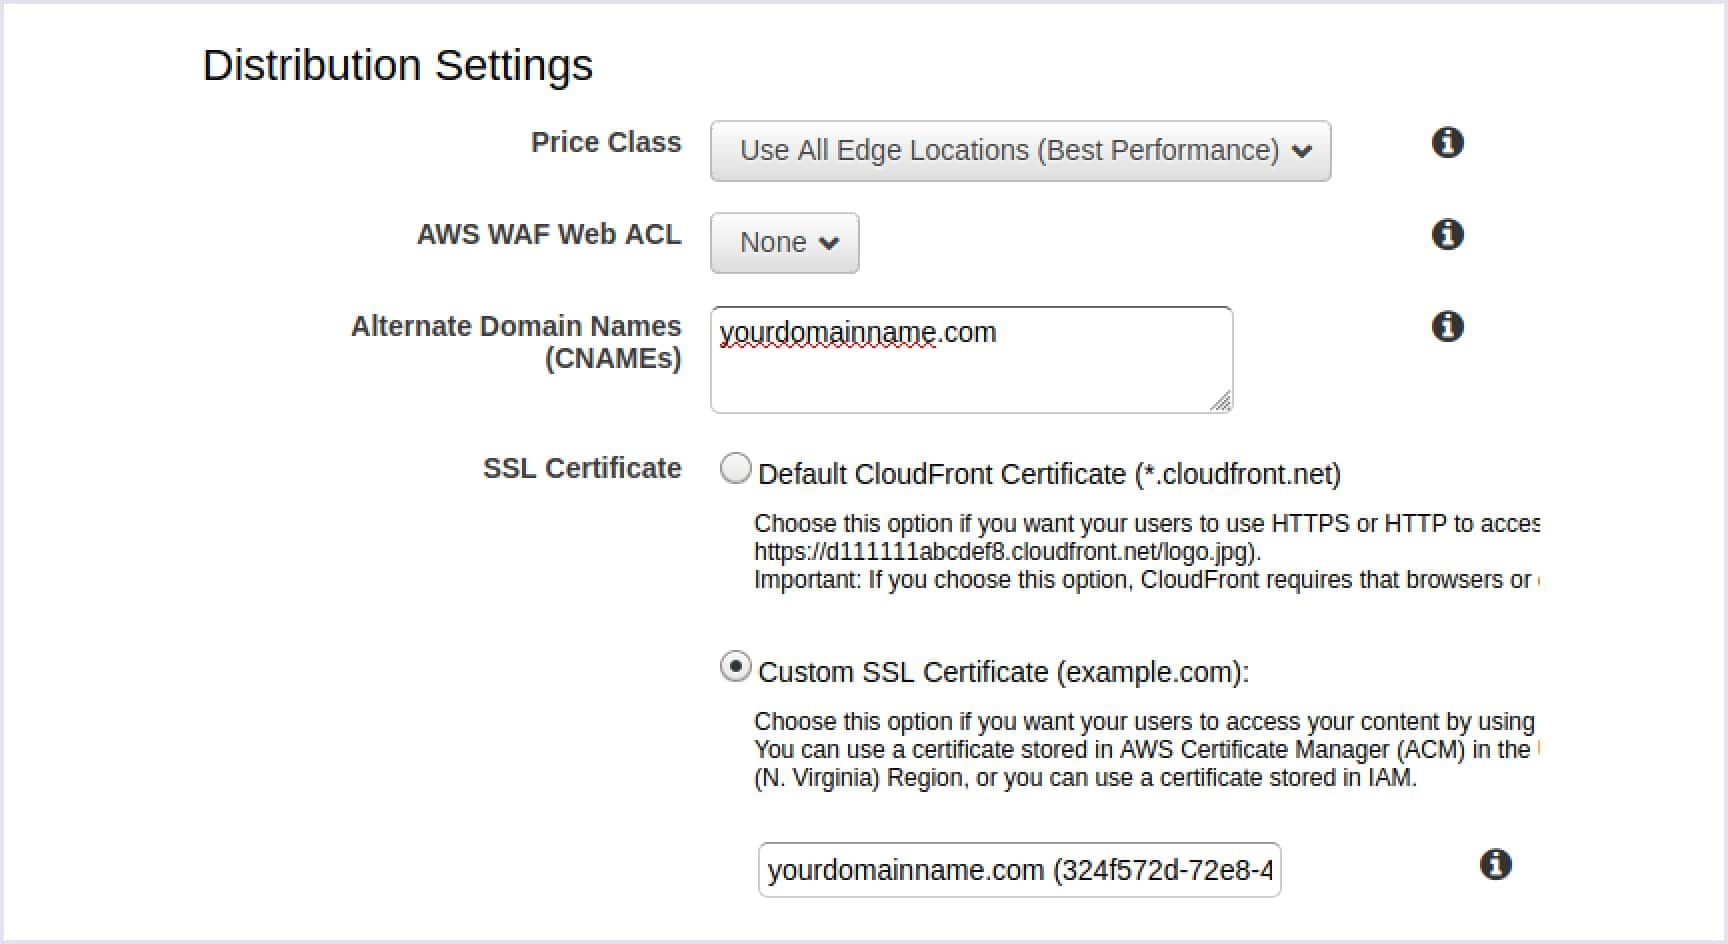 Choosing the Custom SSL certificate